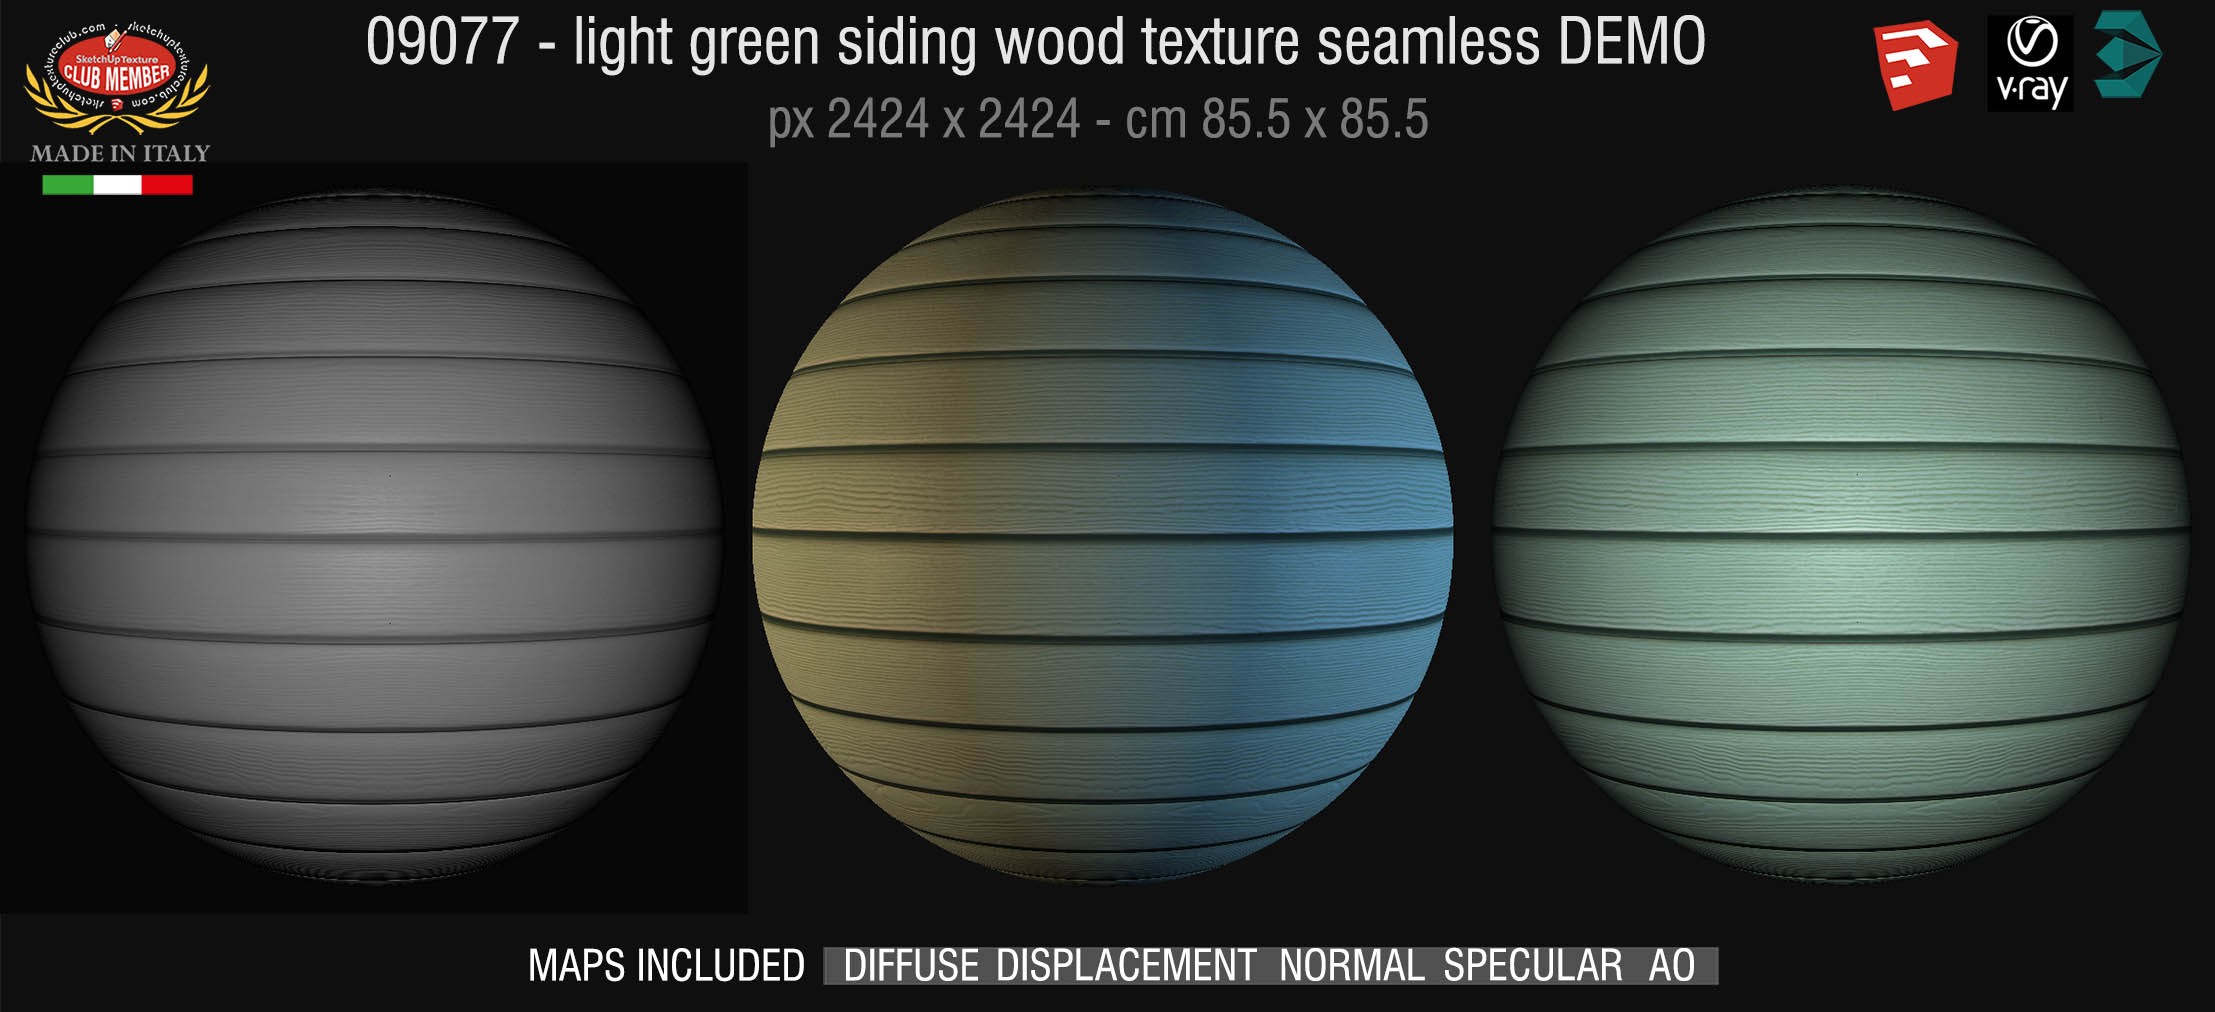 09077 HR Light green siding wood texture + maps DEMO